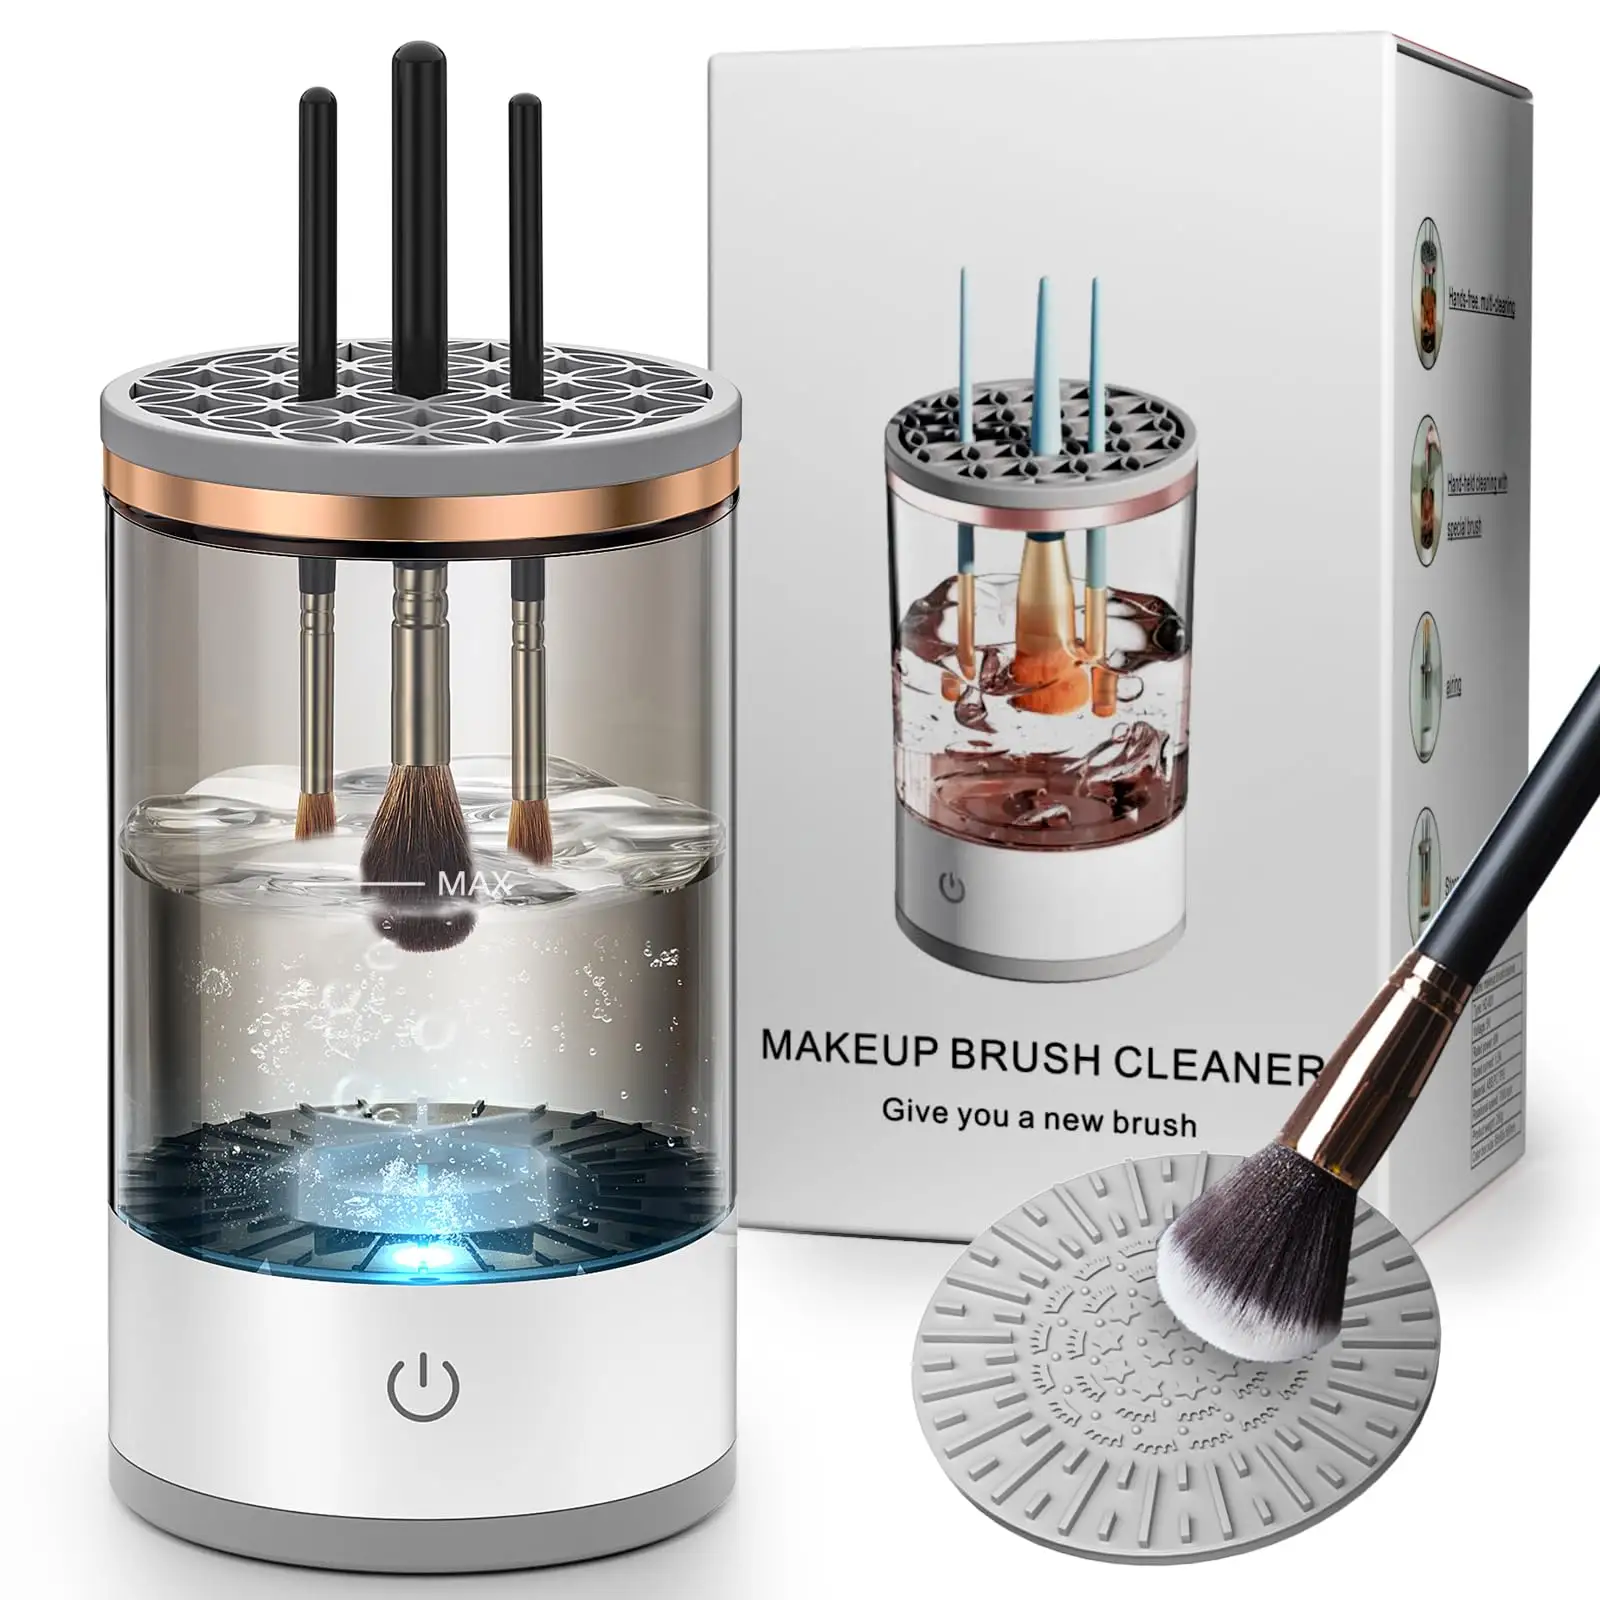 Machine de nettoyage de brosse de maquillage électrique portable Machine de nettoyage de brosse de maquillage USB avec tapis de nettoyage de brosse de maquillage